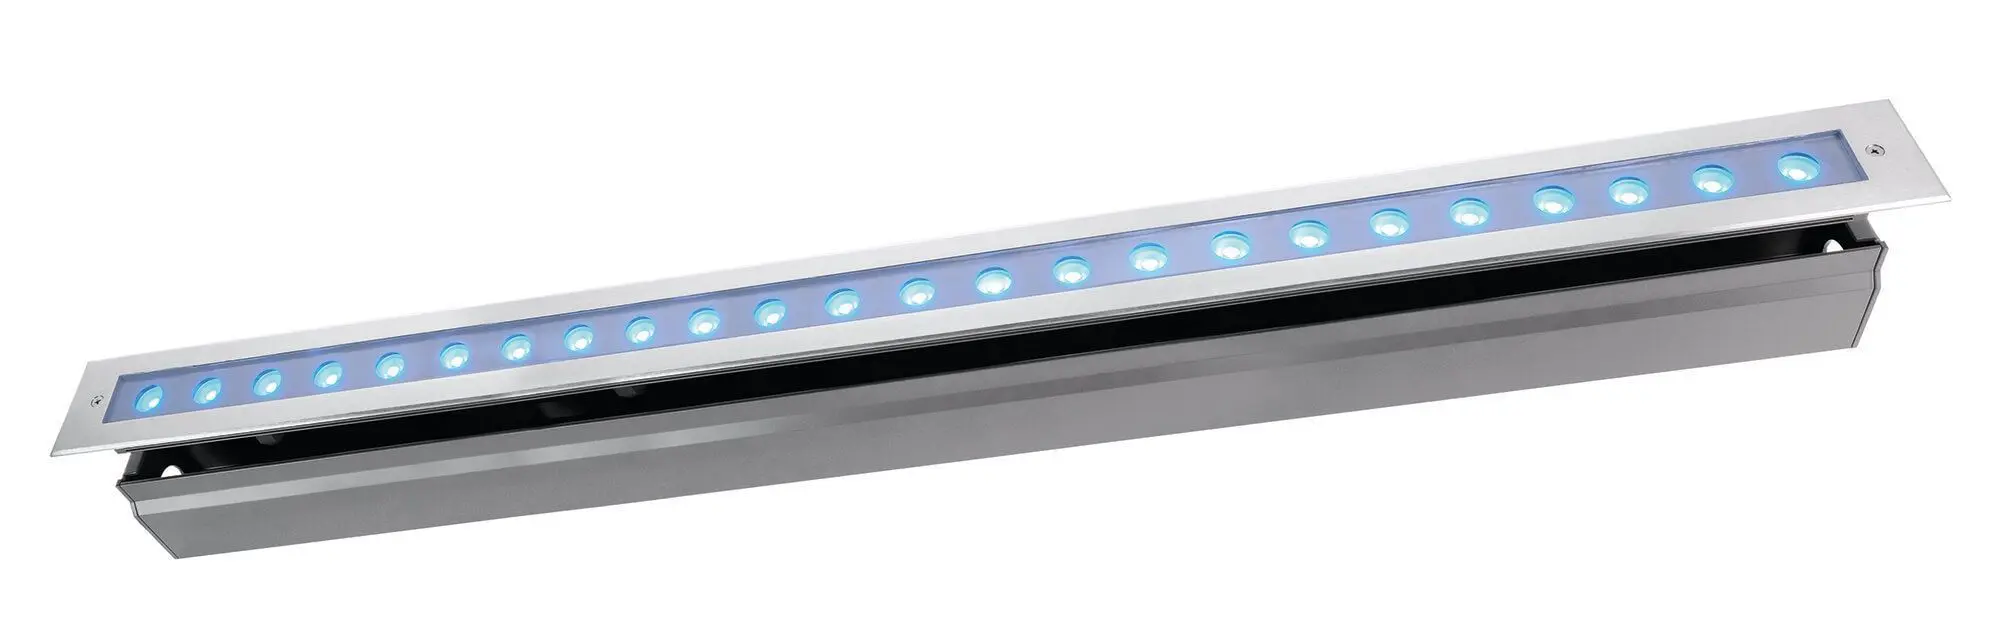 Bodeneinbauleuchte Linear Line VI LED 42.8W, RGB, 700lm